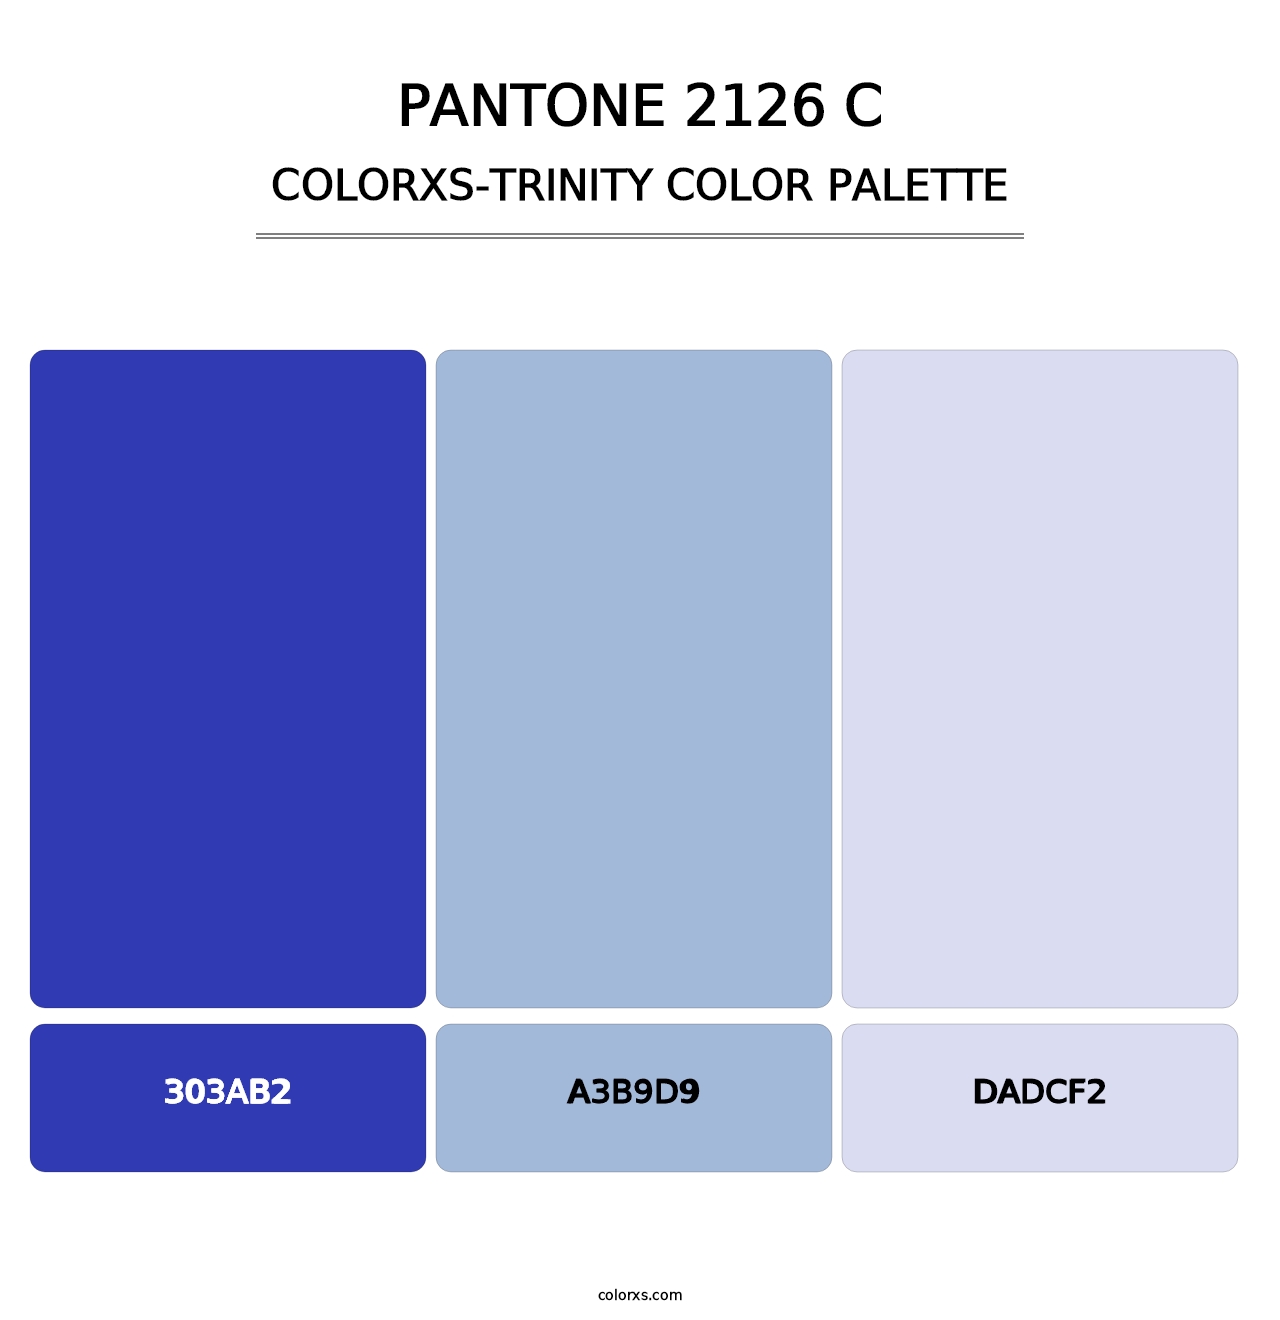 PANTONE 2126 C - Colorxs Trinity Palette